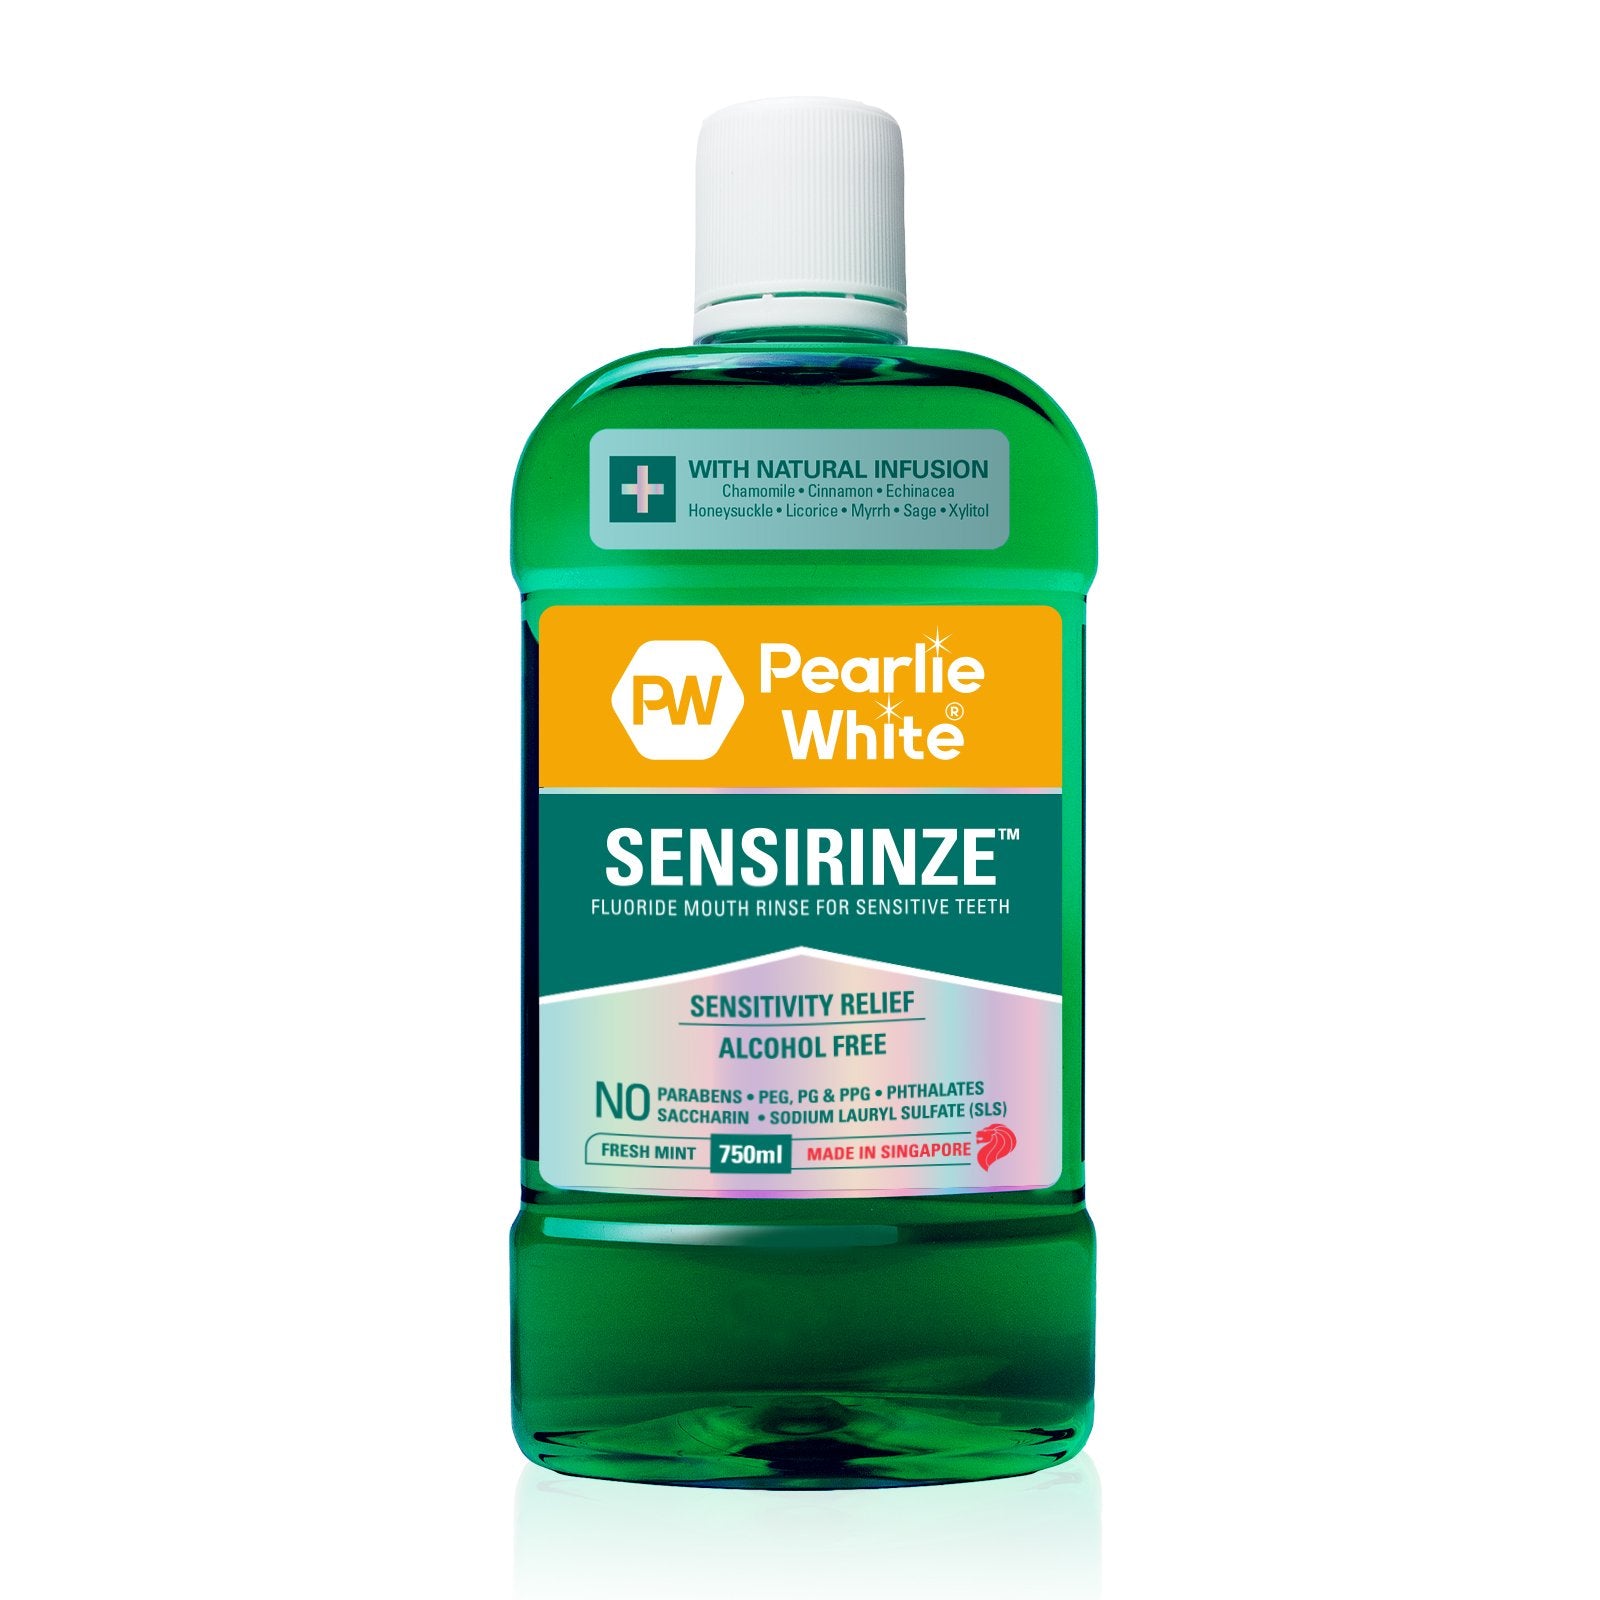 Sensirinze™ Fluoride Mouth Rinse for Sensitive Teeth 750ml - Triple Pack [Expires Sept 2024]